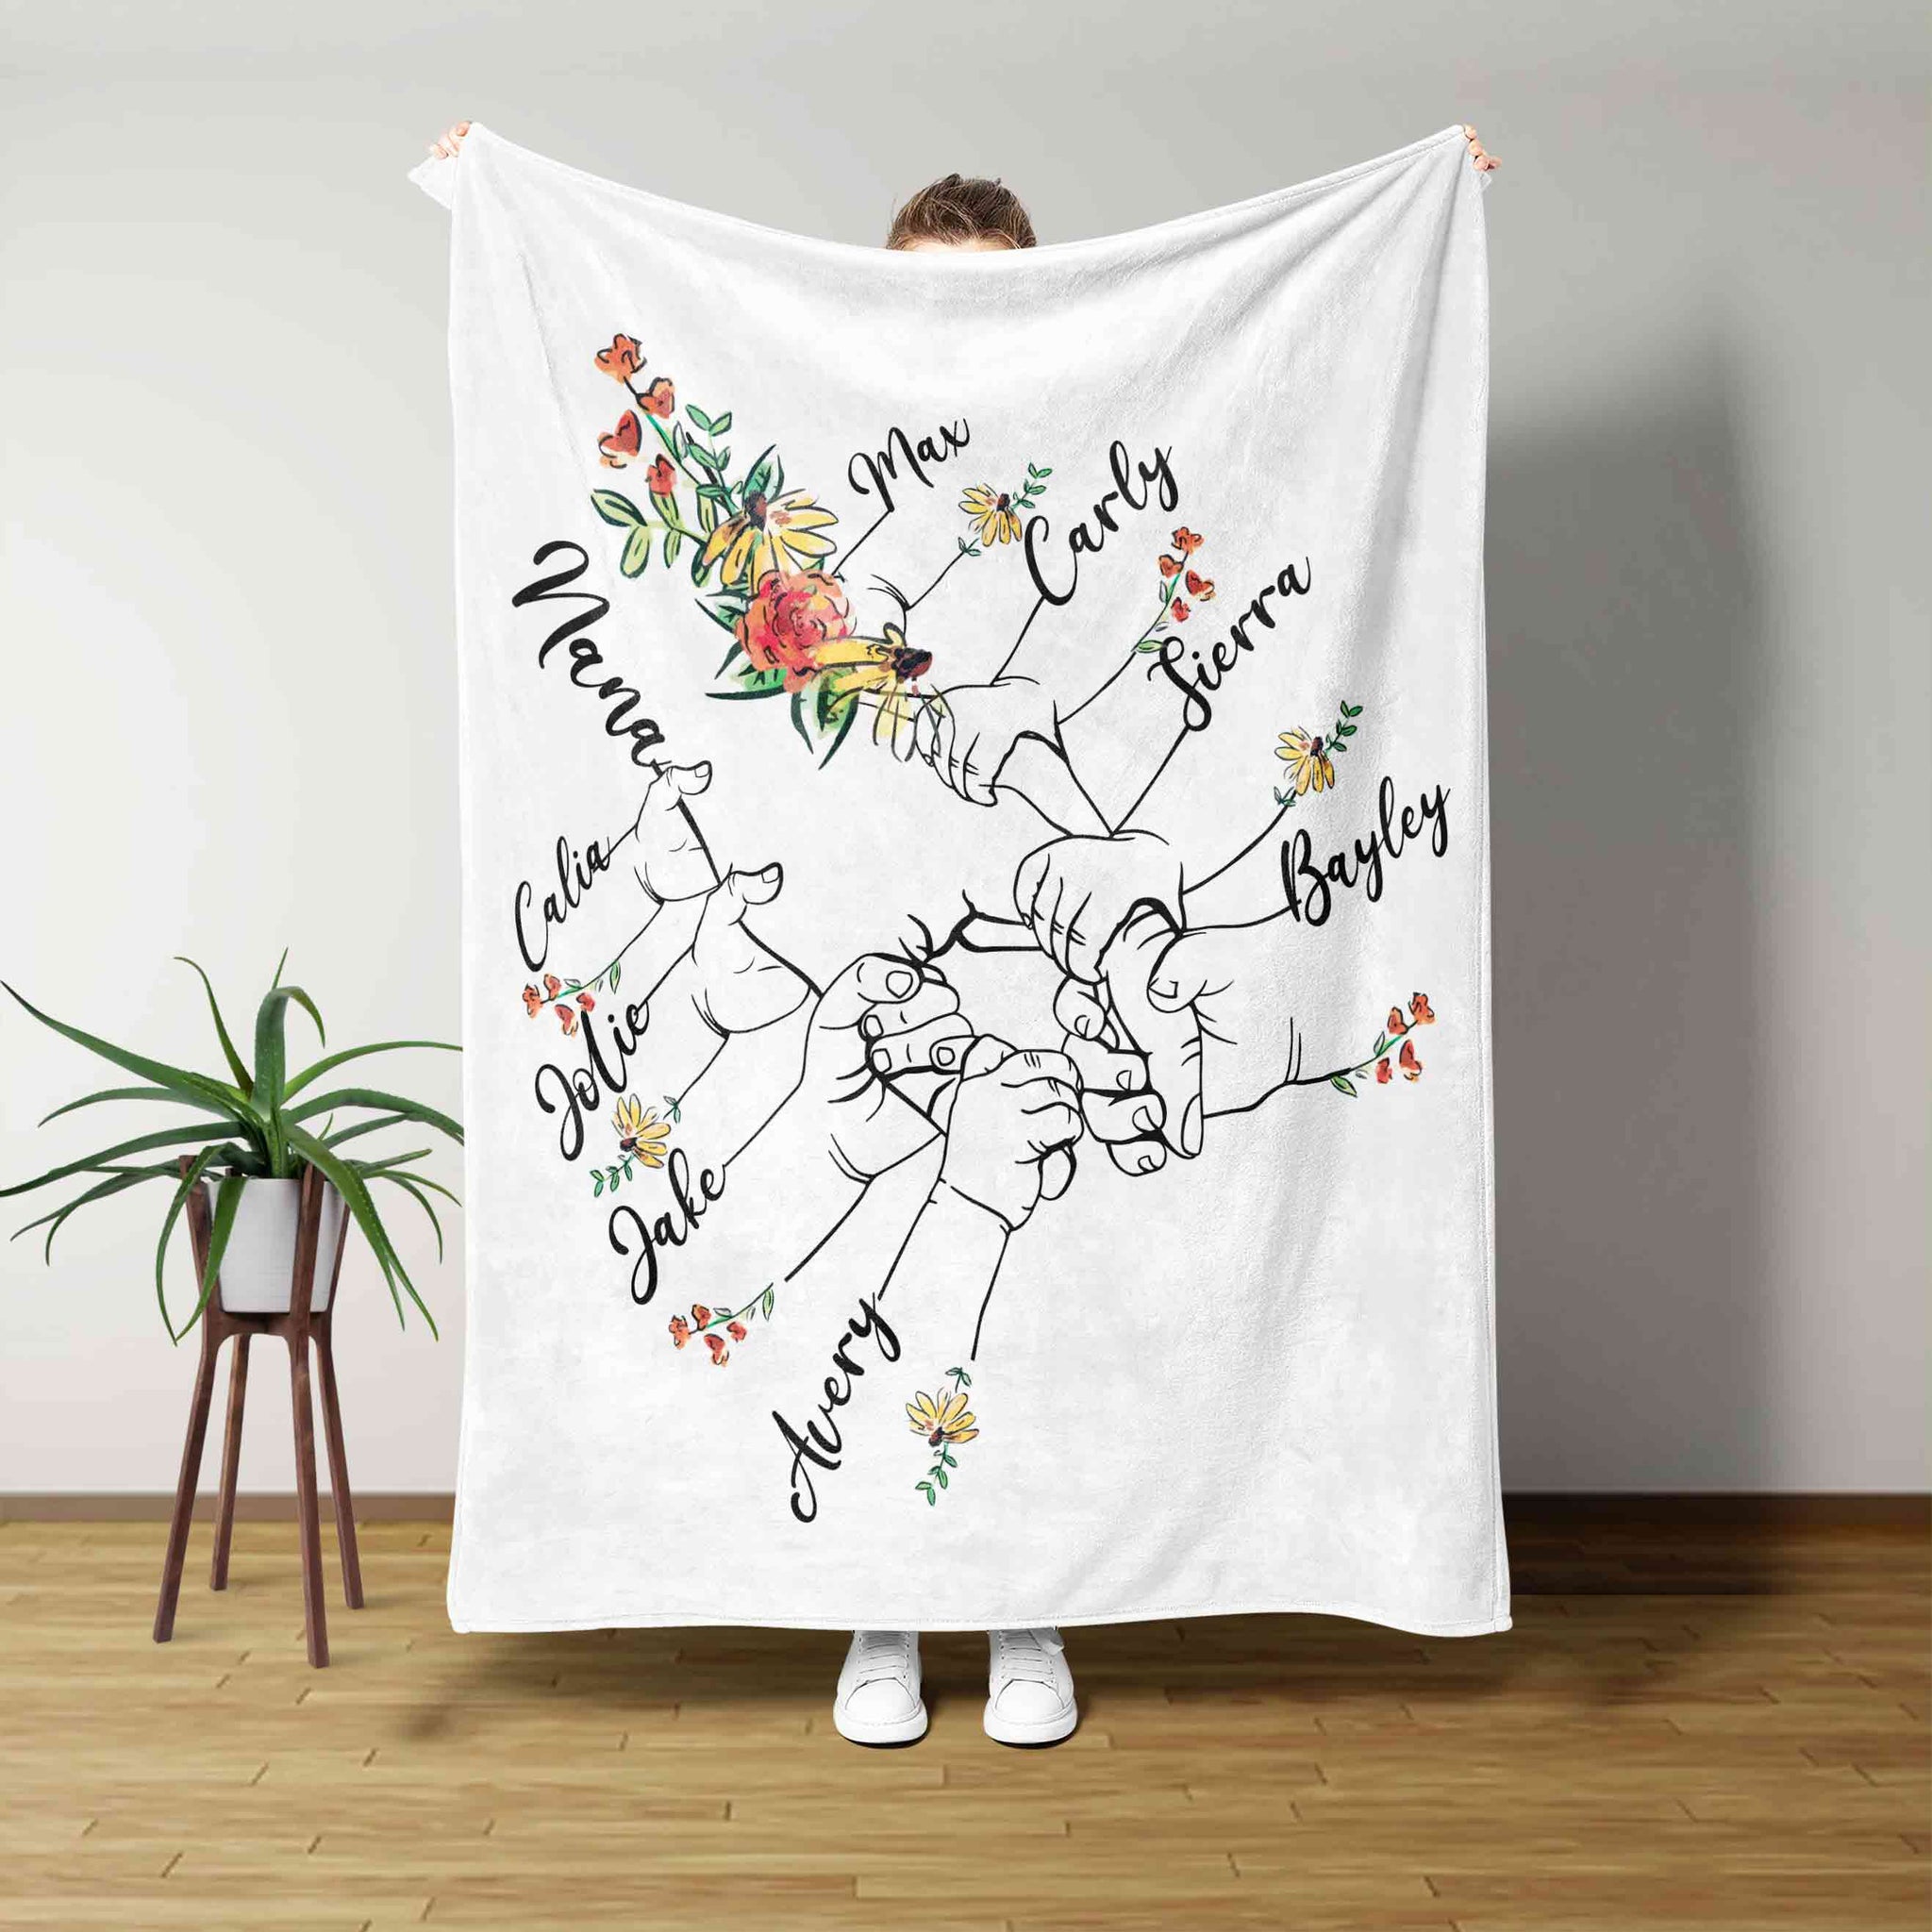 Personalized Name Blanket, Hand Blanket, Flower Blanket, Family Blanket, Gift Blanket